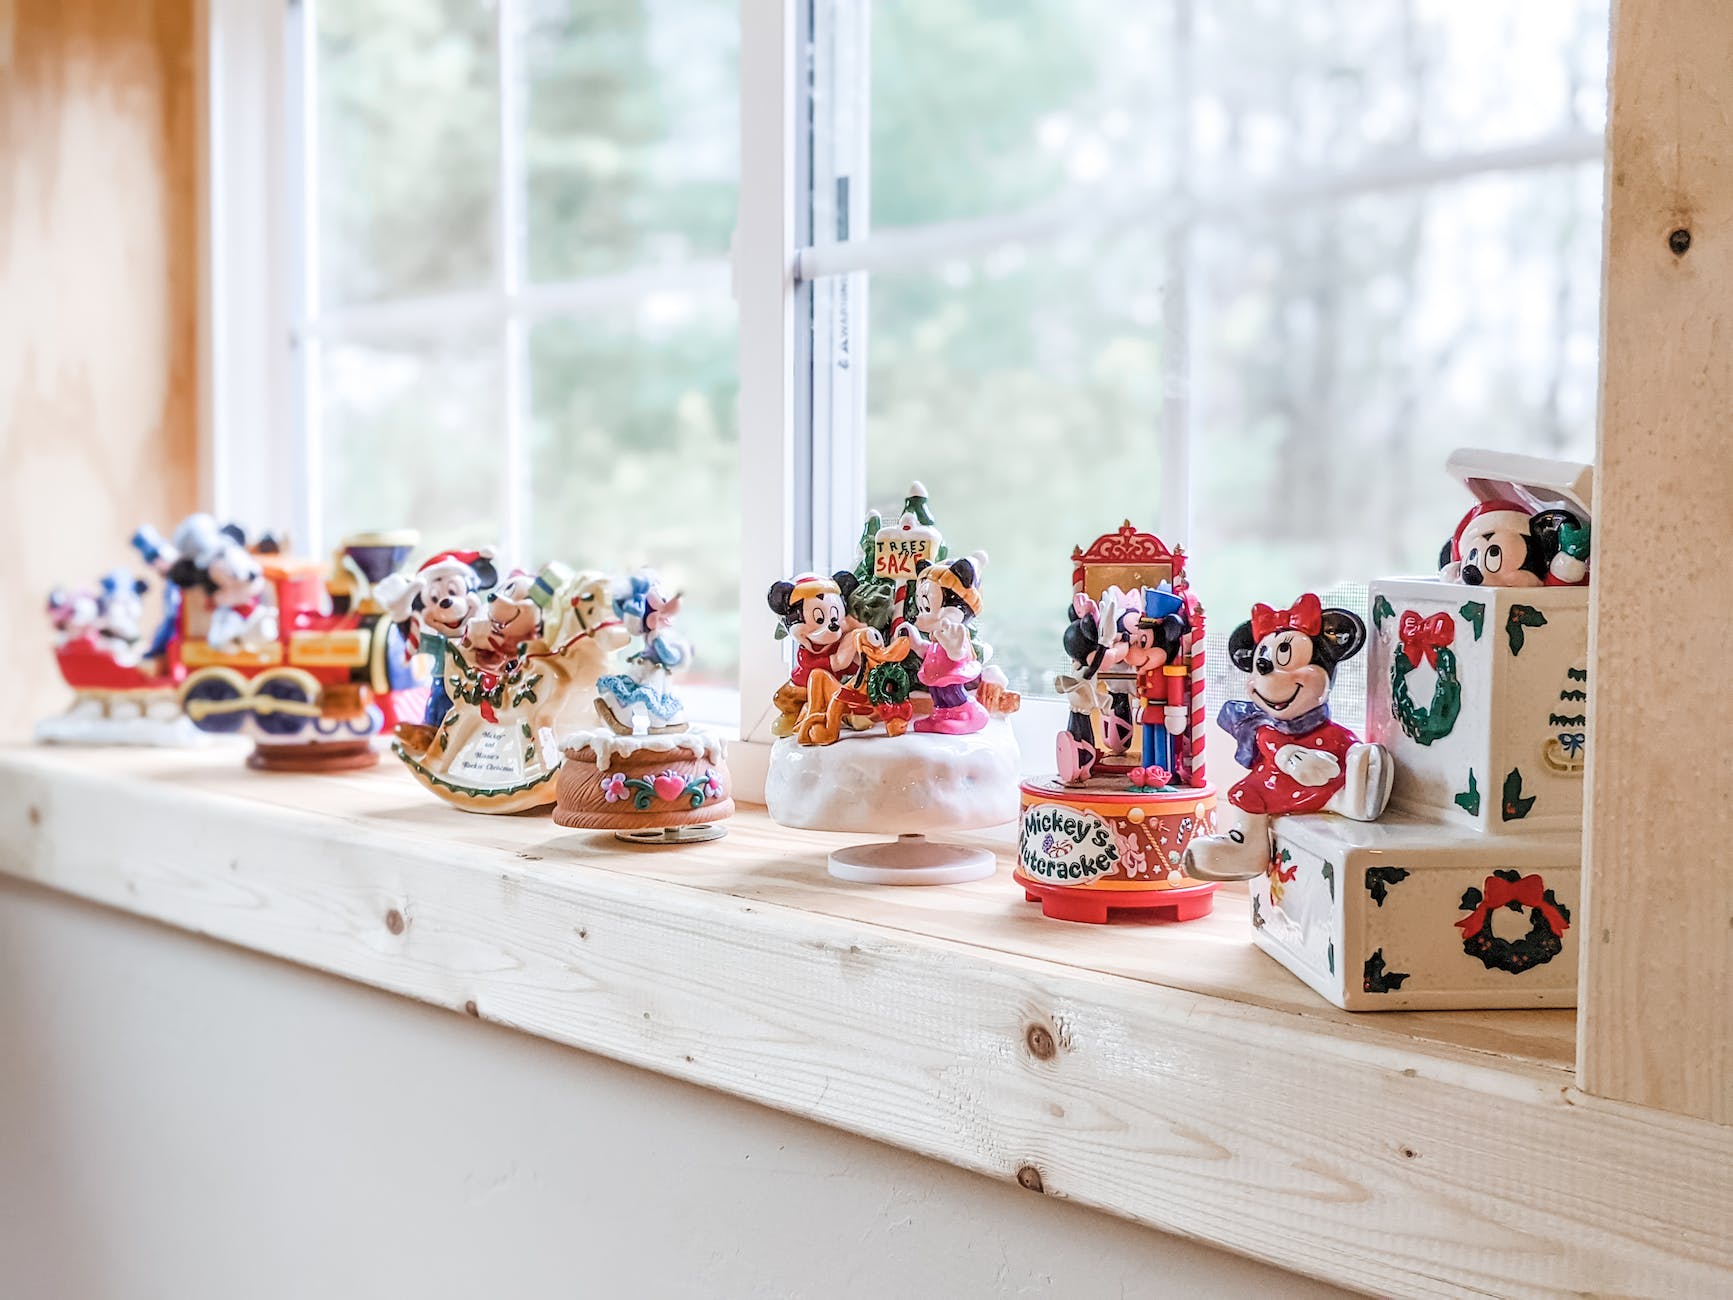 figurines beside the glass window